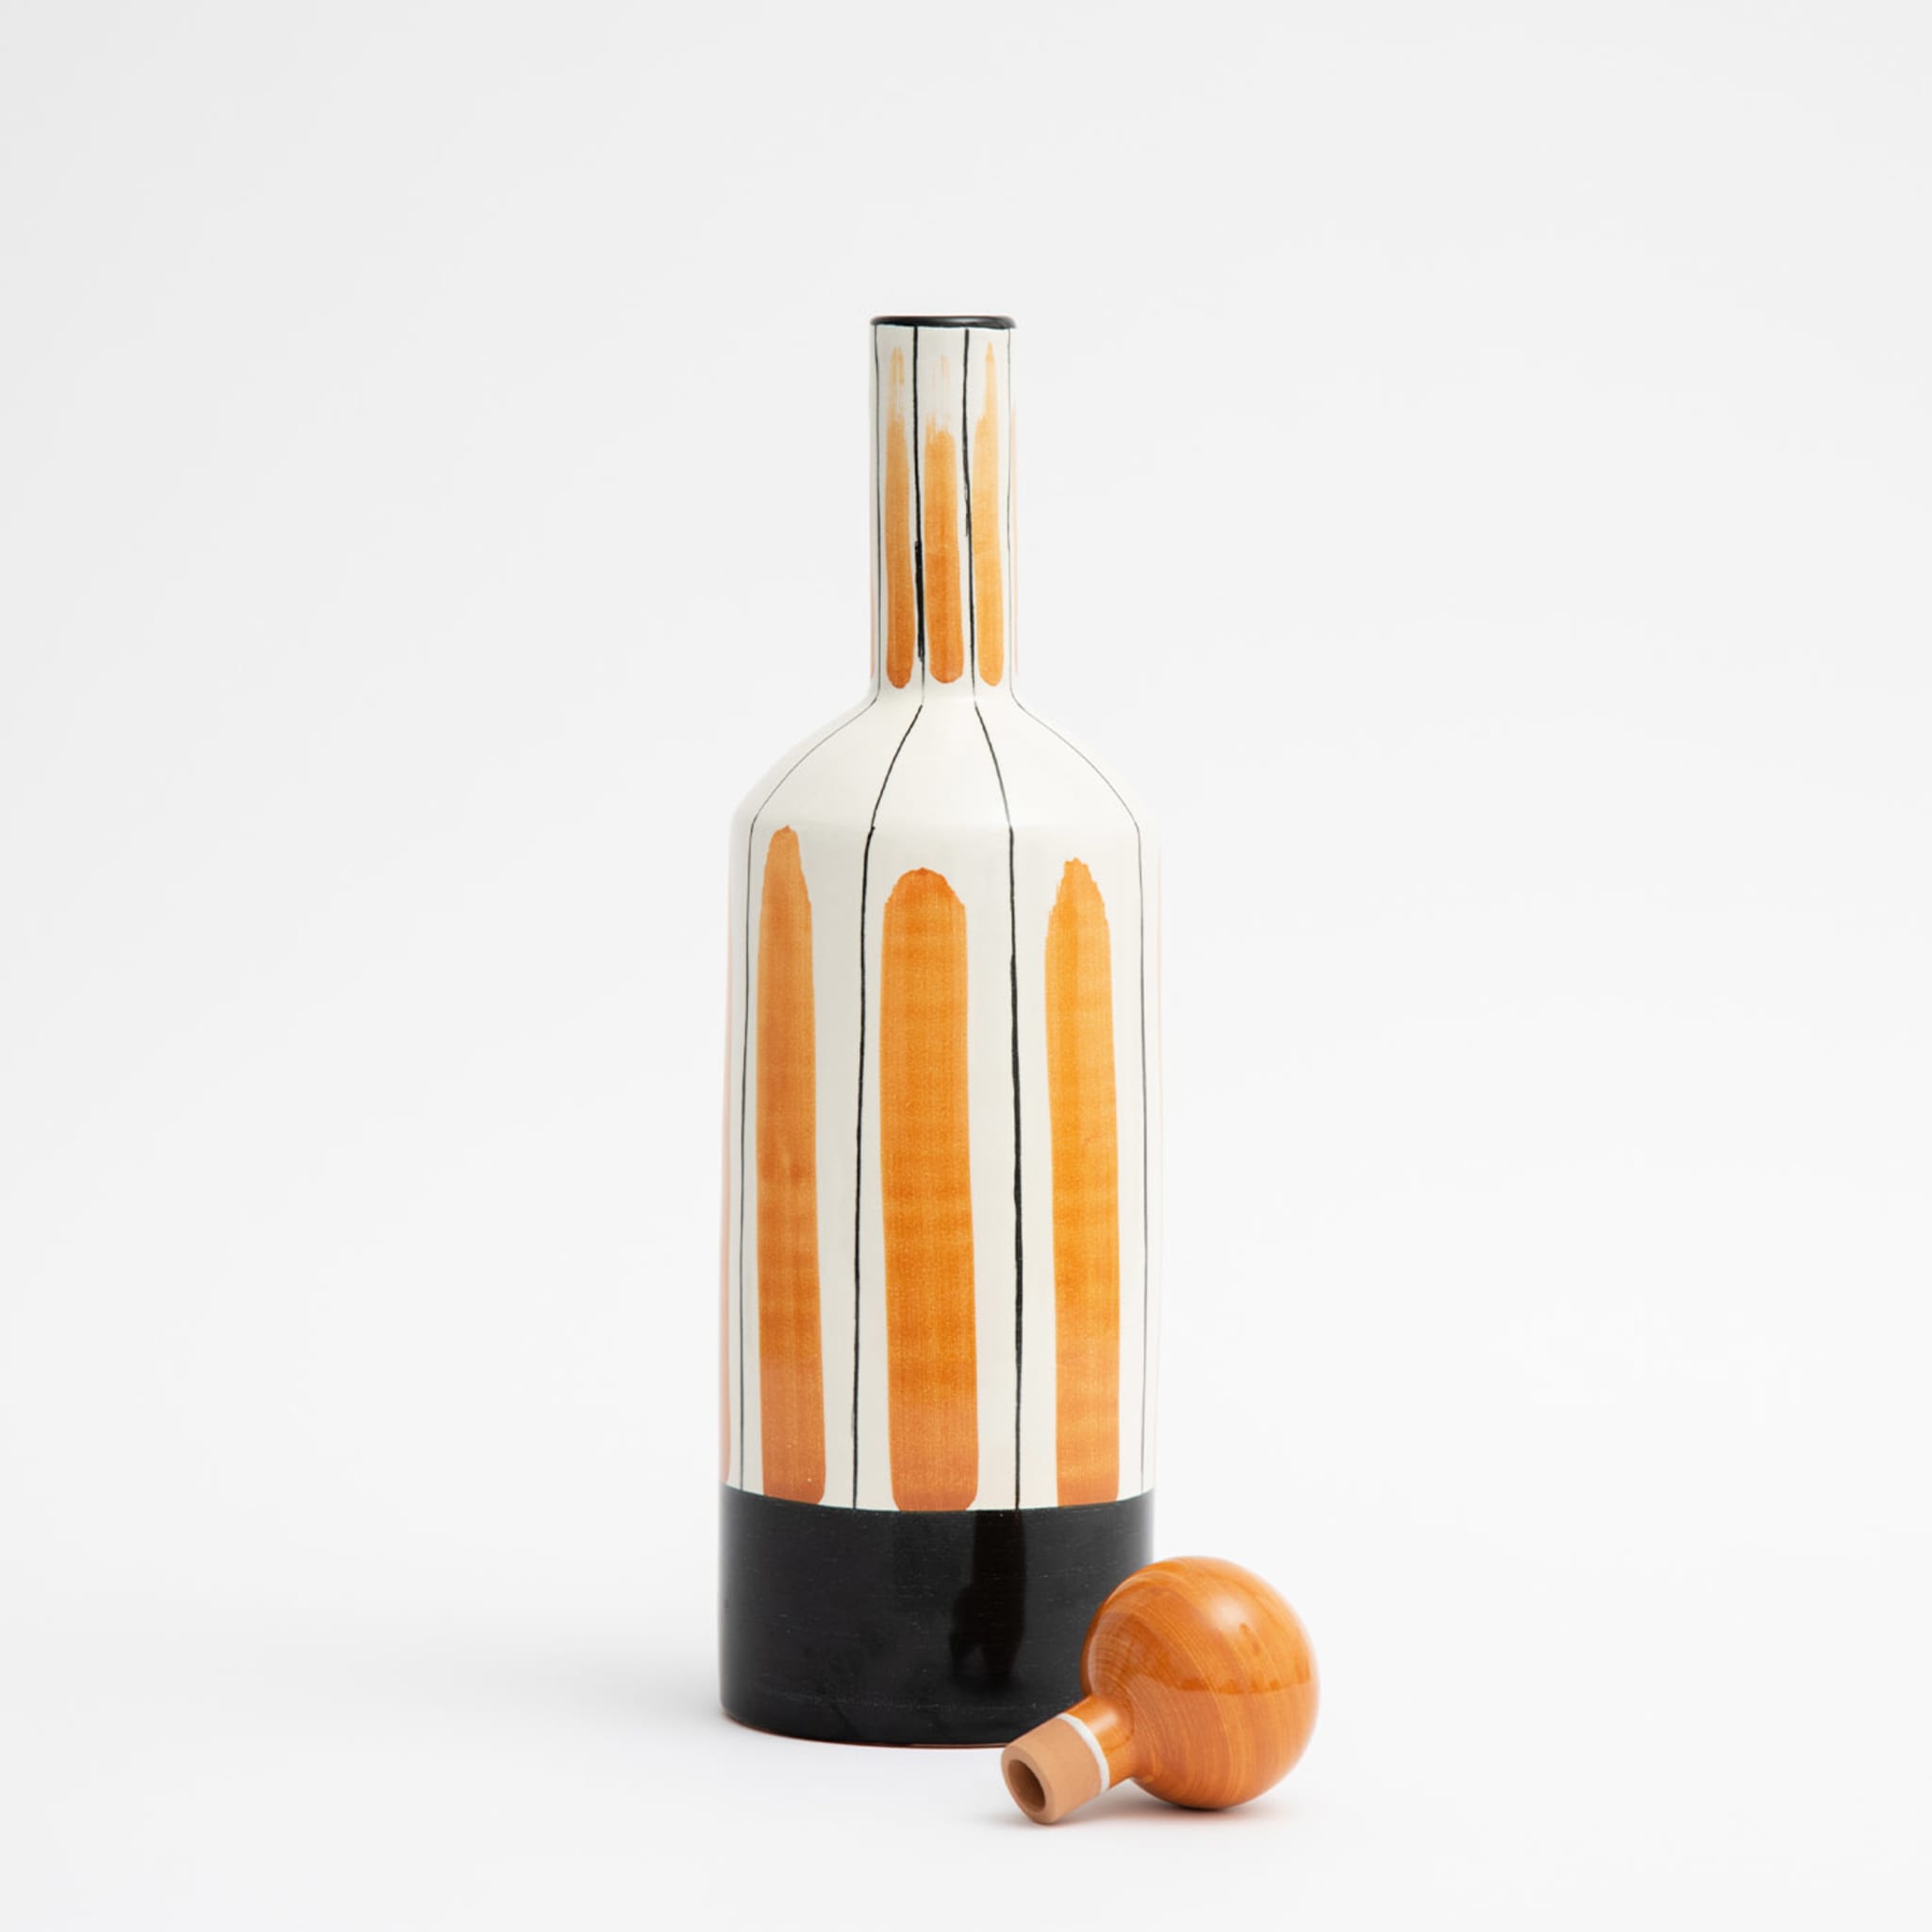 Talia Decorative Mustard Bottle with Lid - Alternative view 1